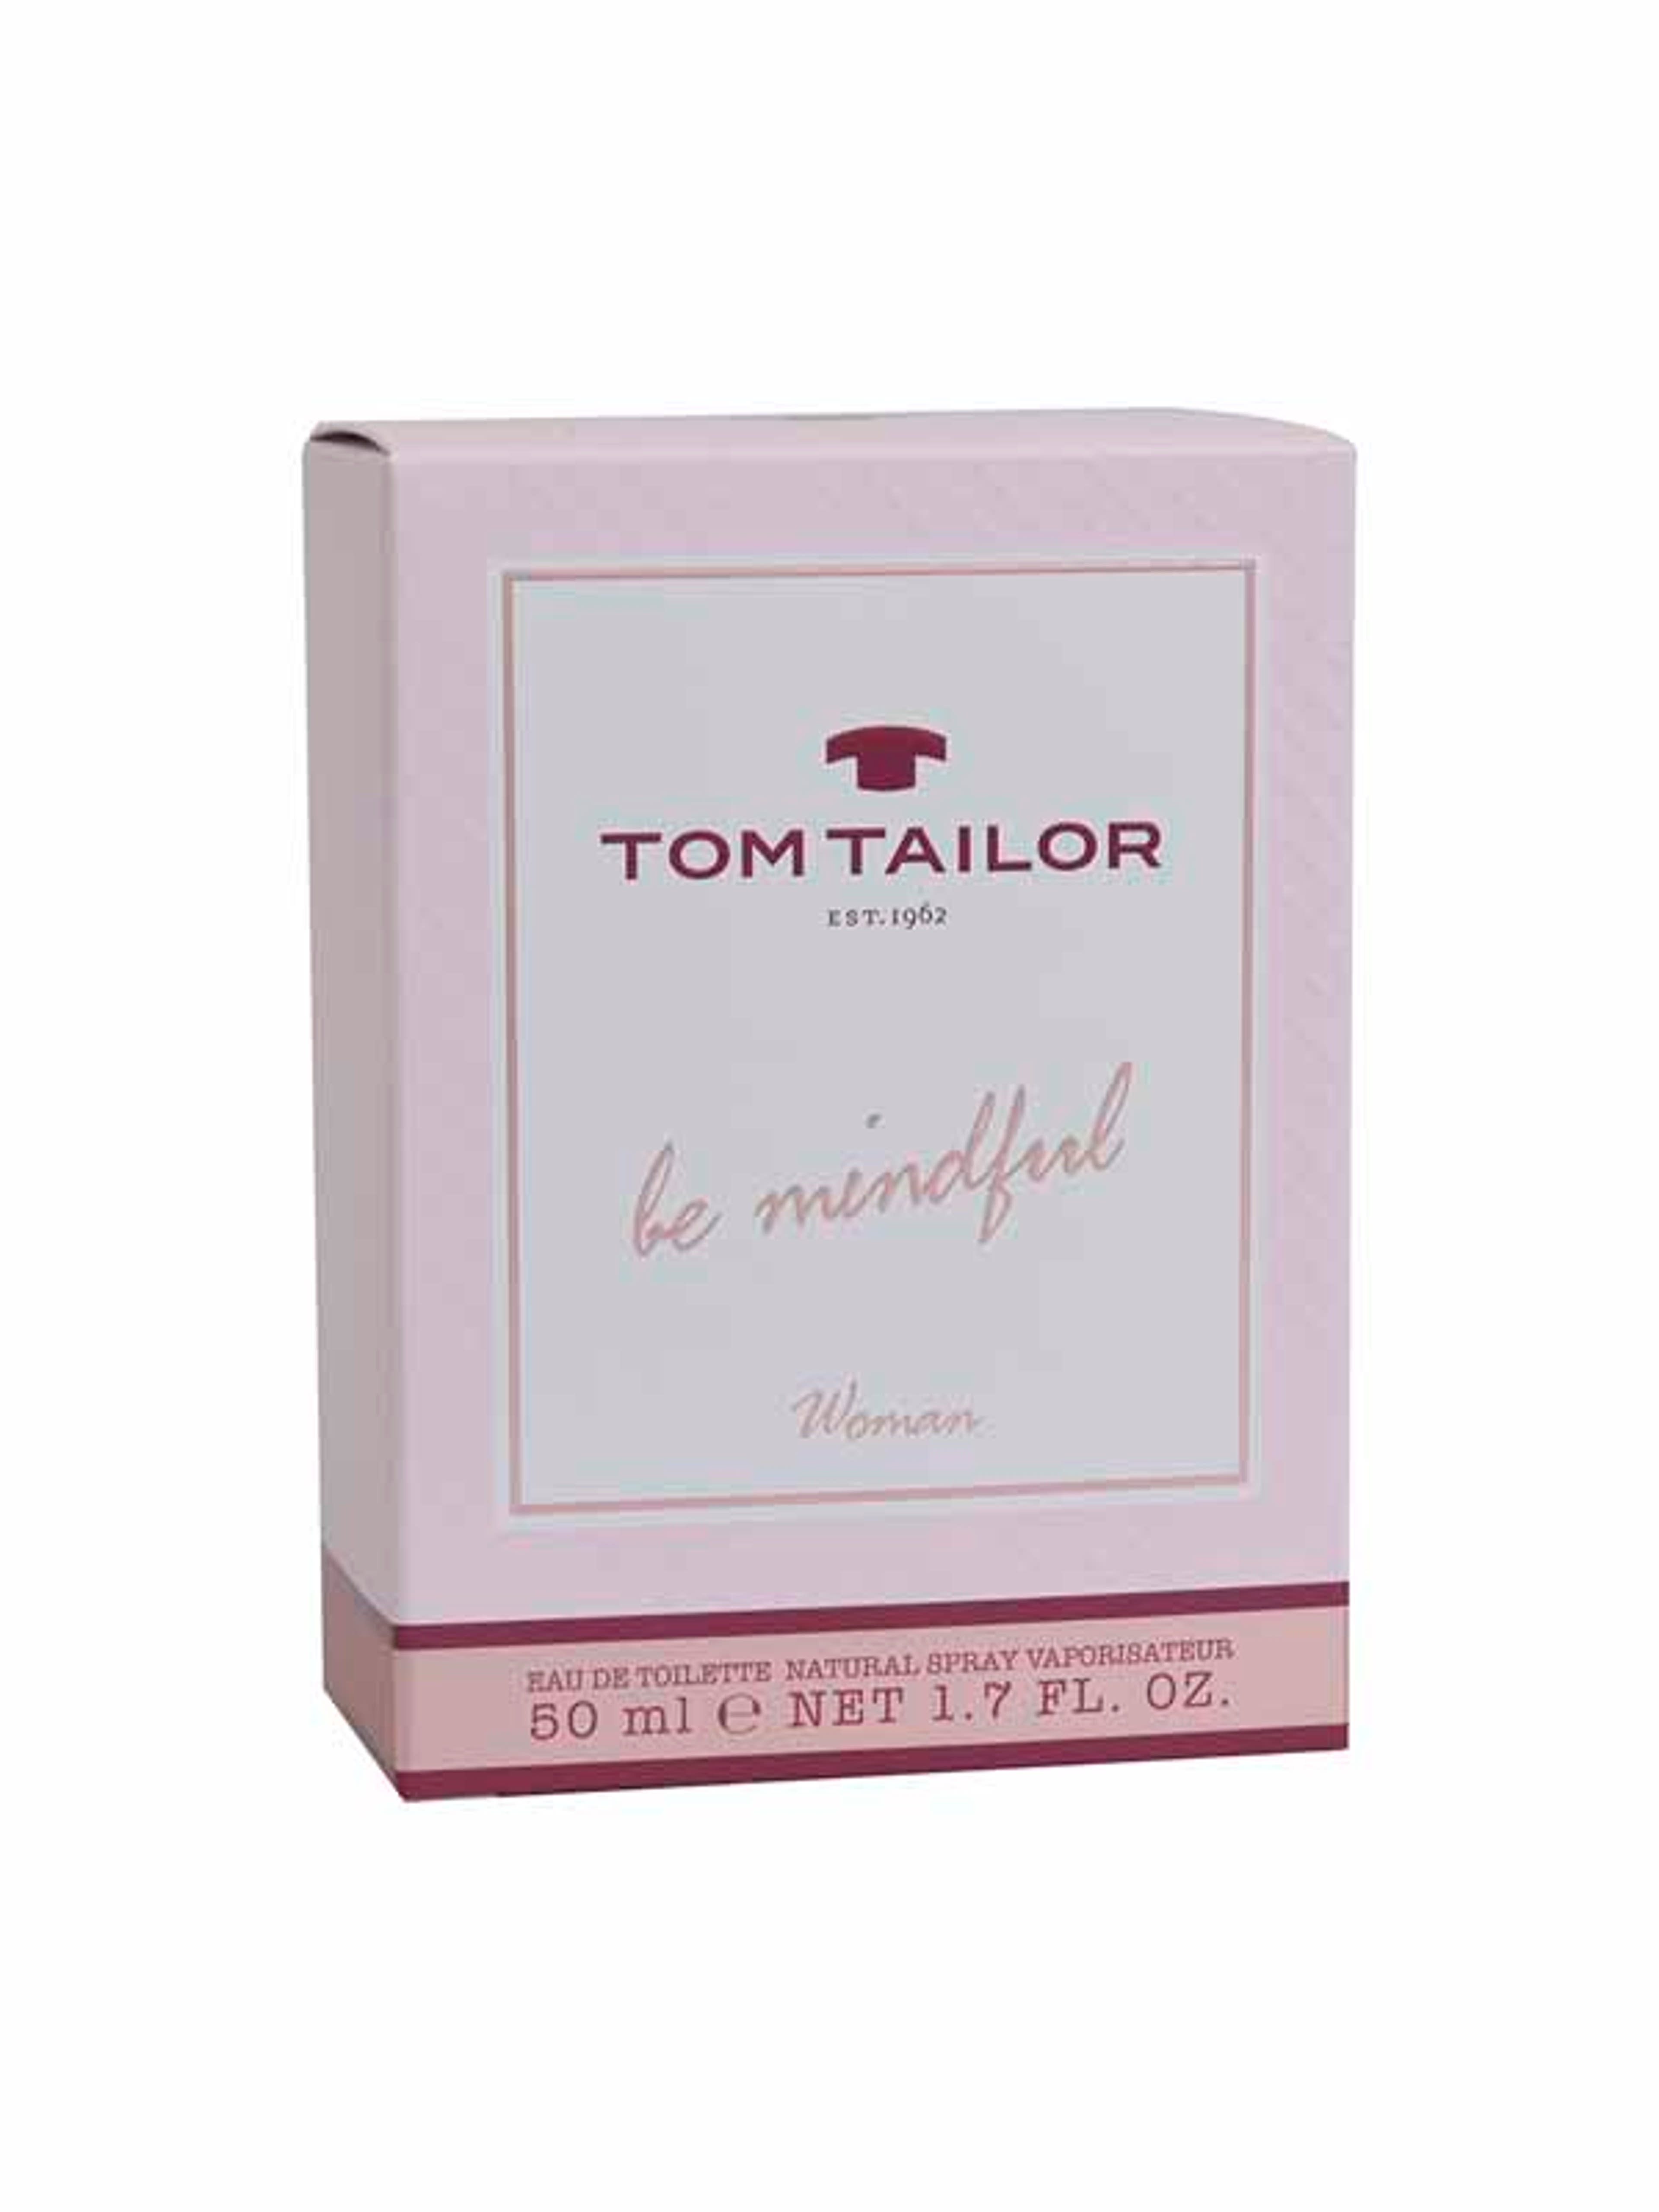 Tom Tailor be mindful női Eau de Toilette - 50 ml